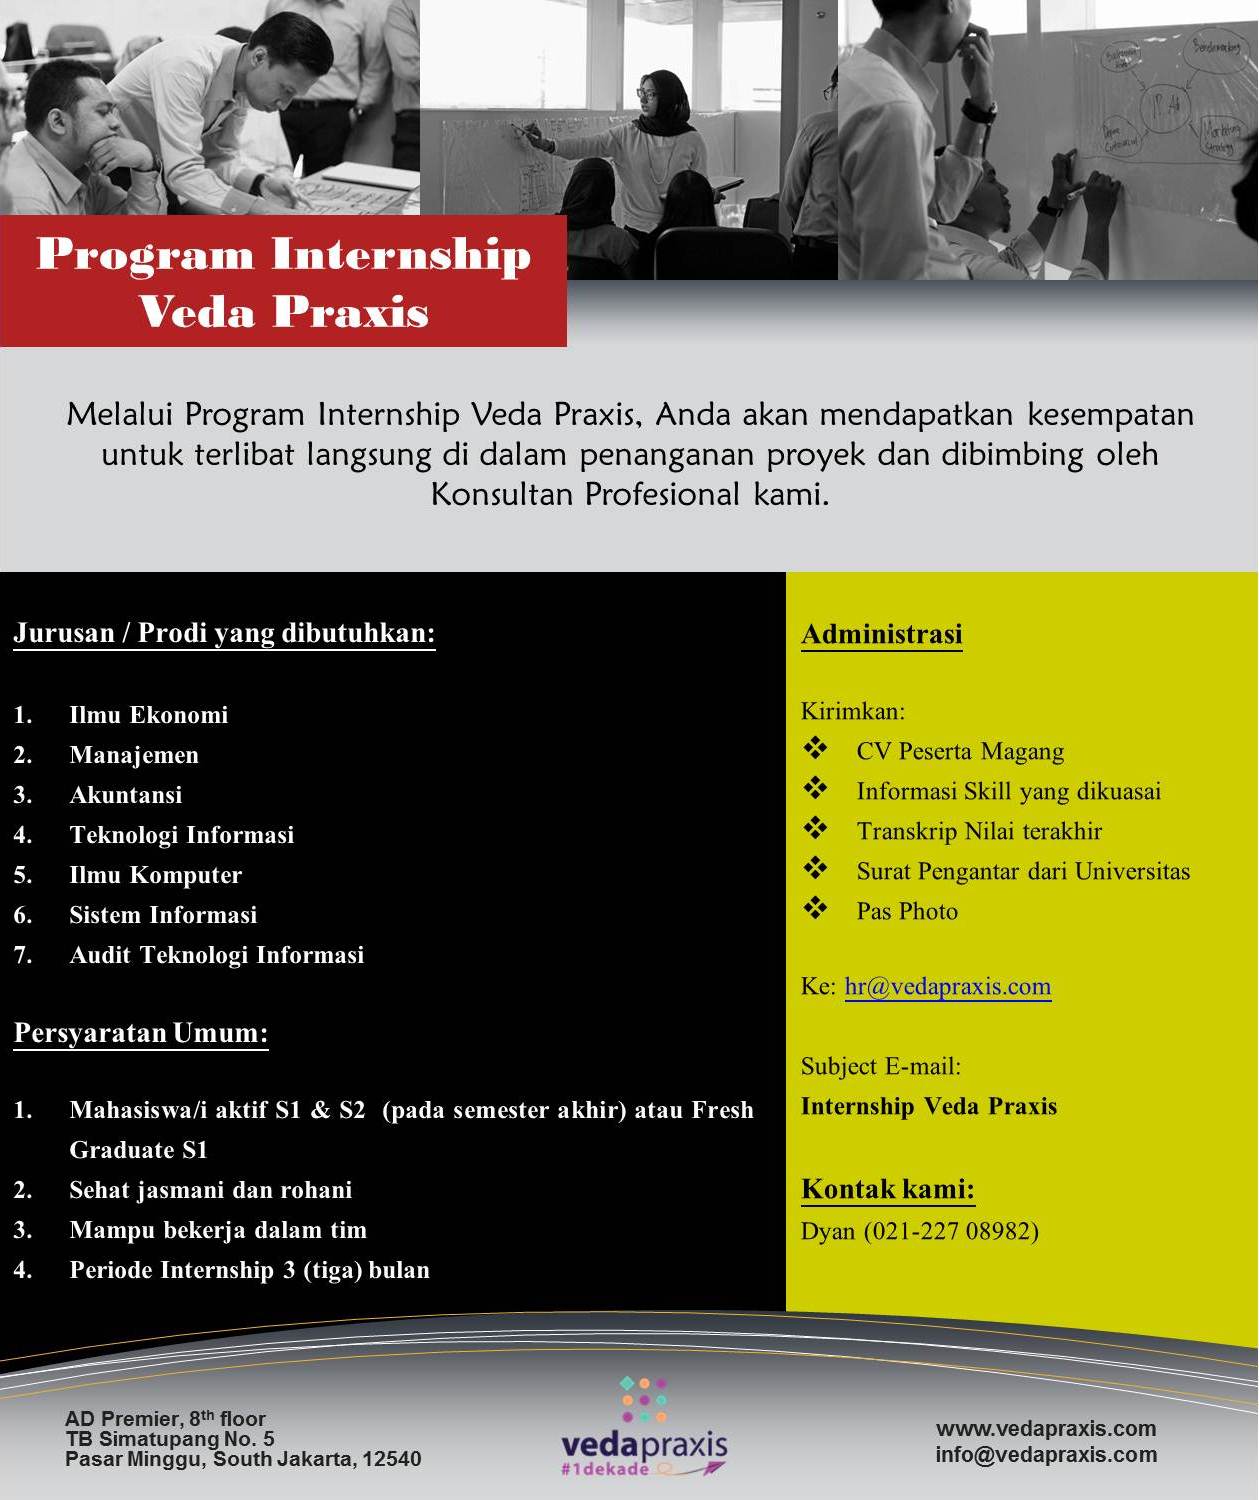 Program Internship Veda Praxis